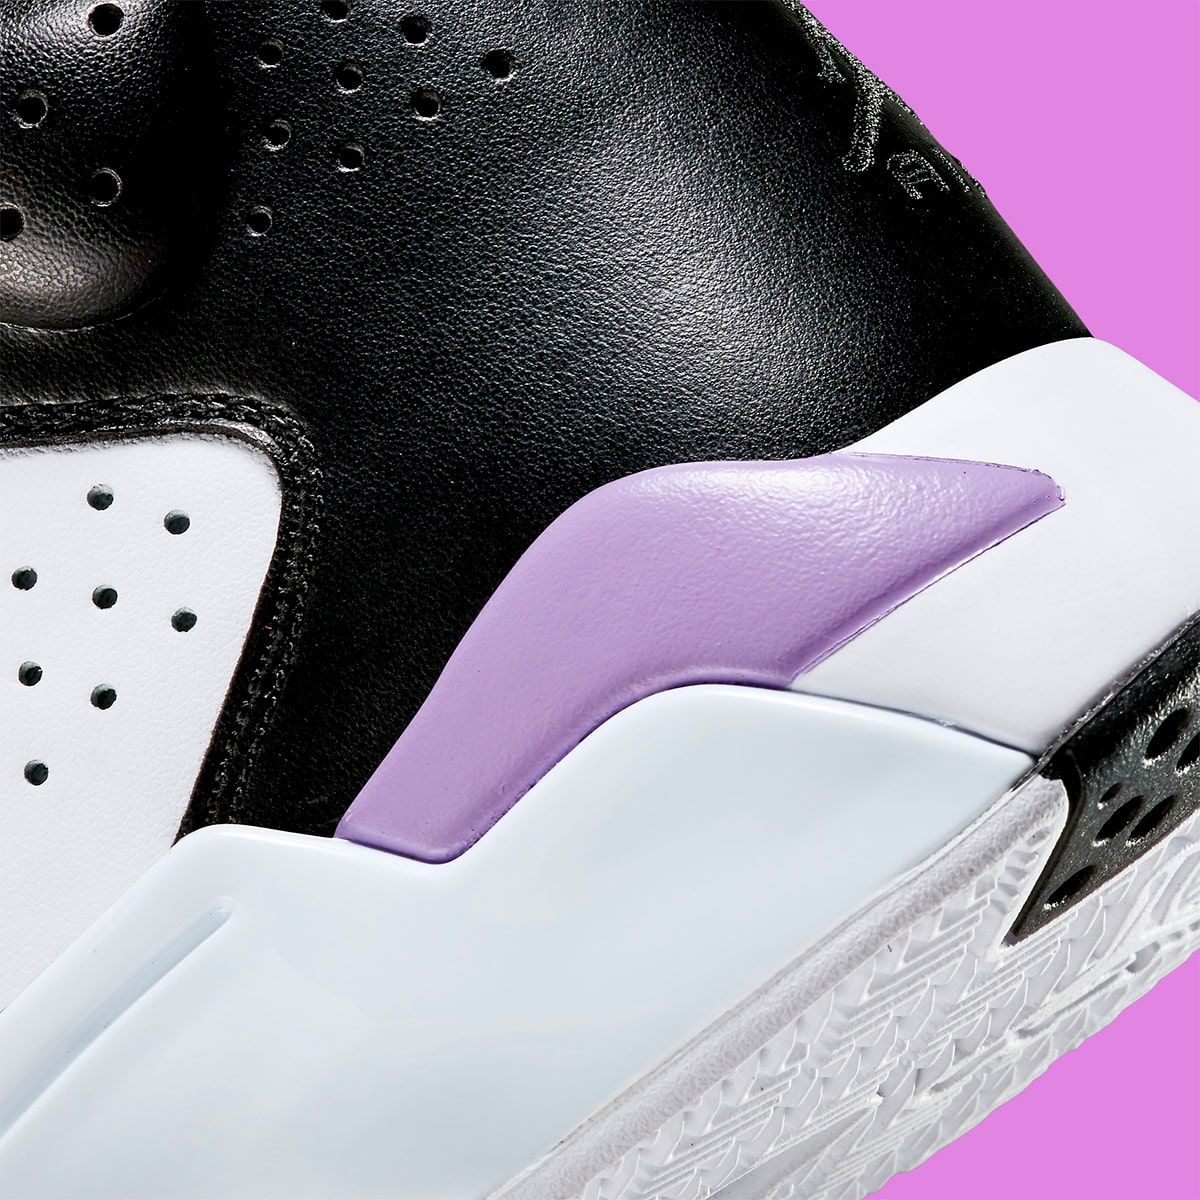 Girls-Exclusive Air Jordan 6-17-23 Leverages Light Violet Accents 